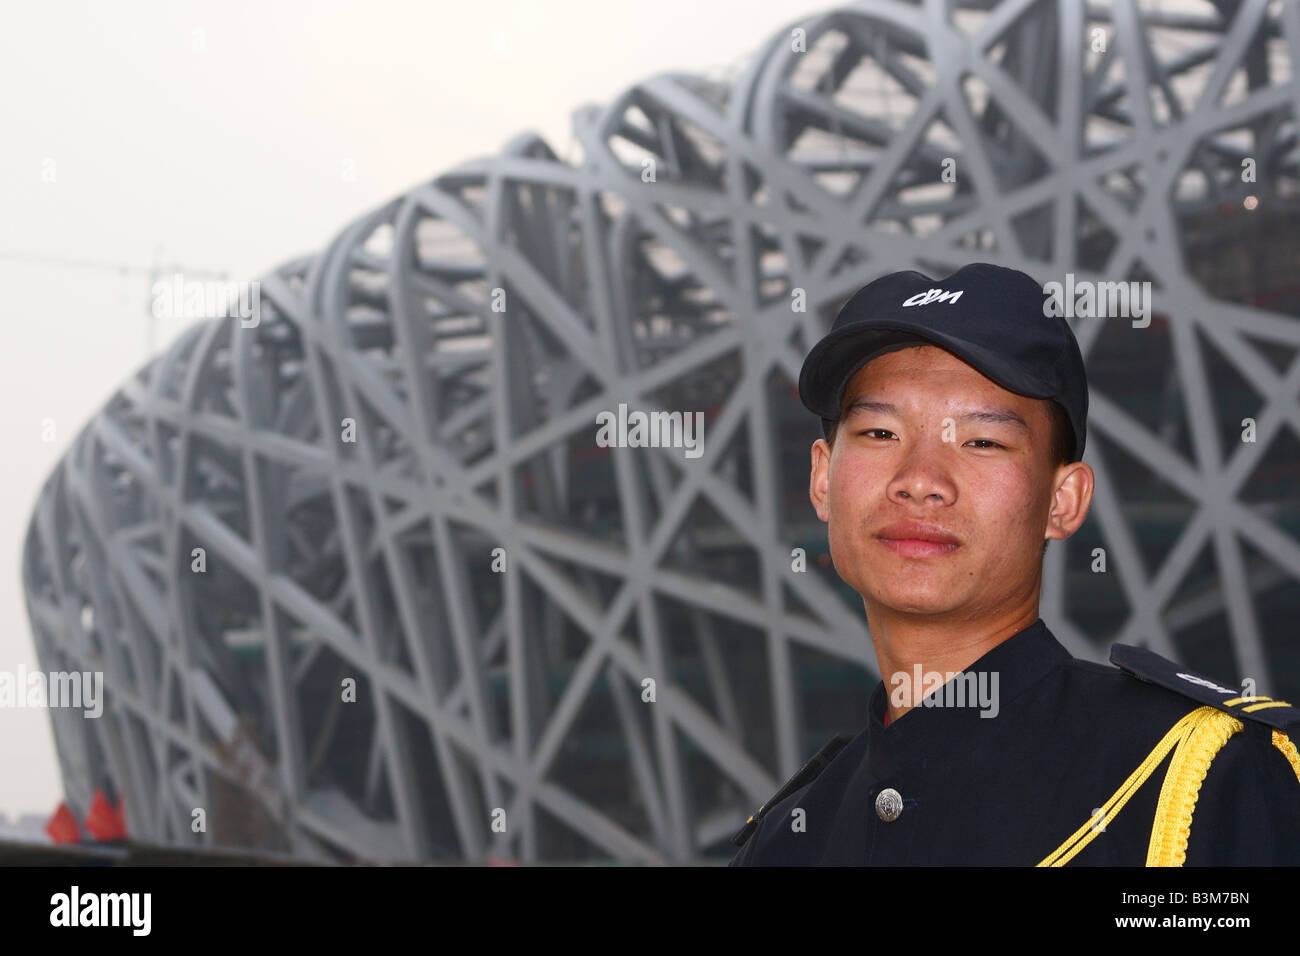 Stade olympique de Beijing guard Banque D'Images